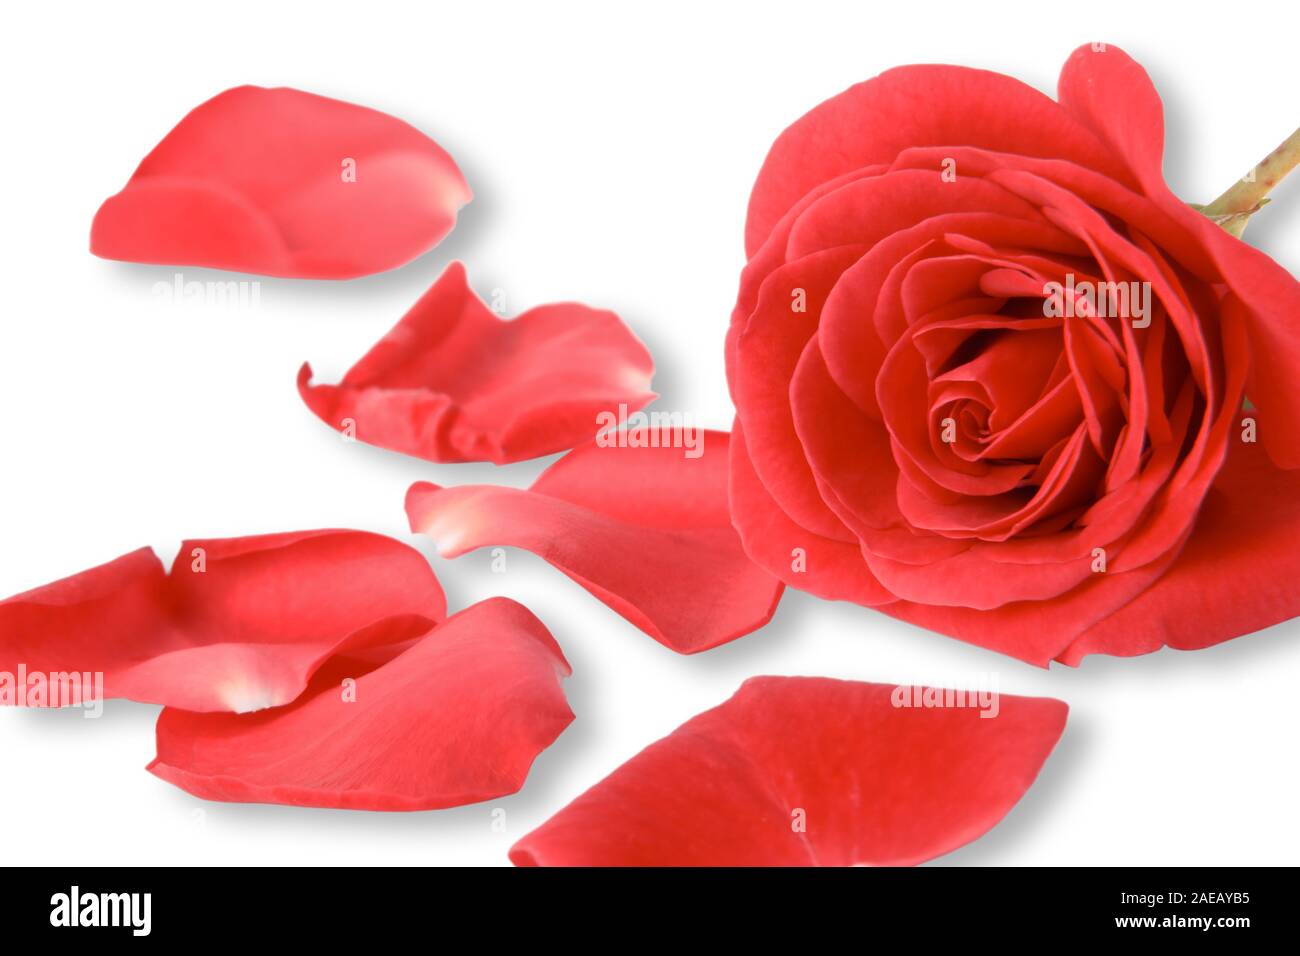 single red rose petal